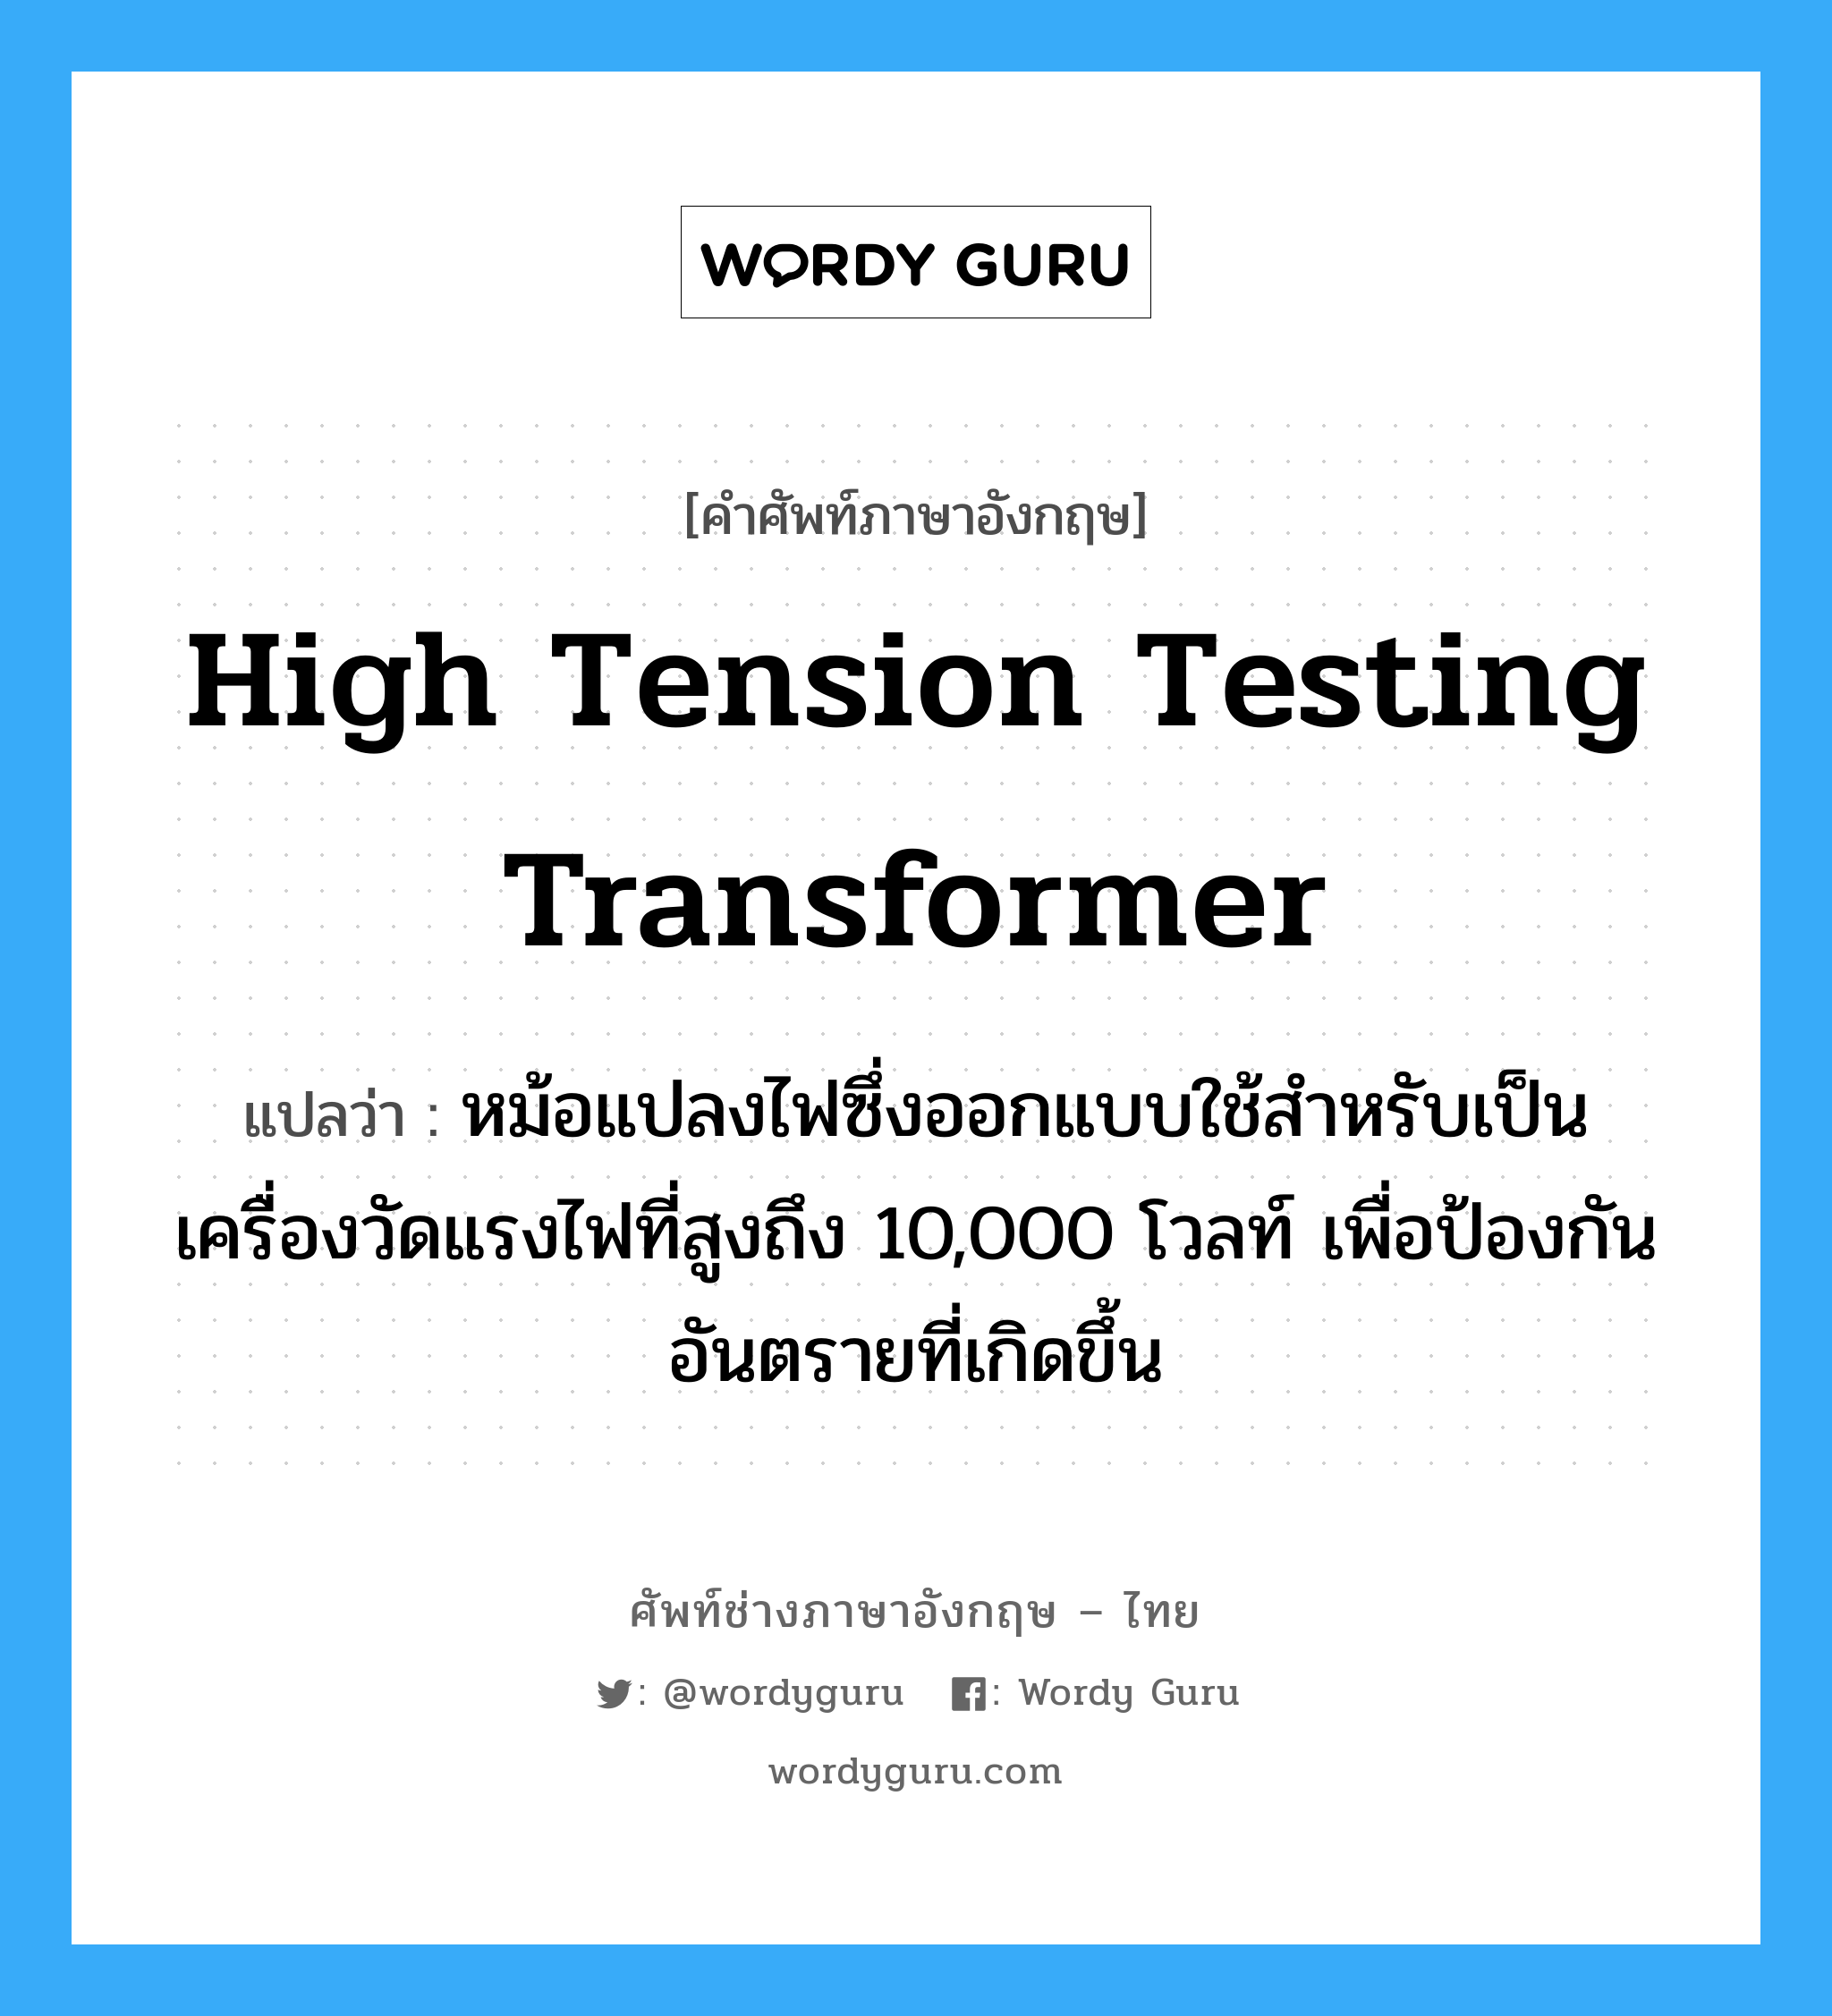 high tension testing transformer แปลว่า?, คำศัพท์ช่างภาษาอังกฤษ - ไทย high tension testing transformer คำศัพท์ภาษาอังกฤษ high tension testing transformer แปลว่า หม้อแปลงไฟซึ่งออกแบบใช้สำหรับเป็นเครื่องวัดแรงไฟที่สูงถึง 10,000 โวลท์ เพื่อป้องกันอันตรายที่เกิดขึ้น